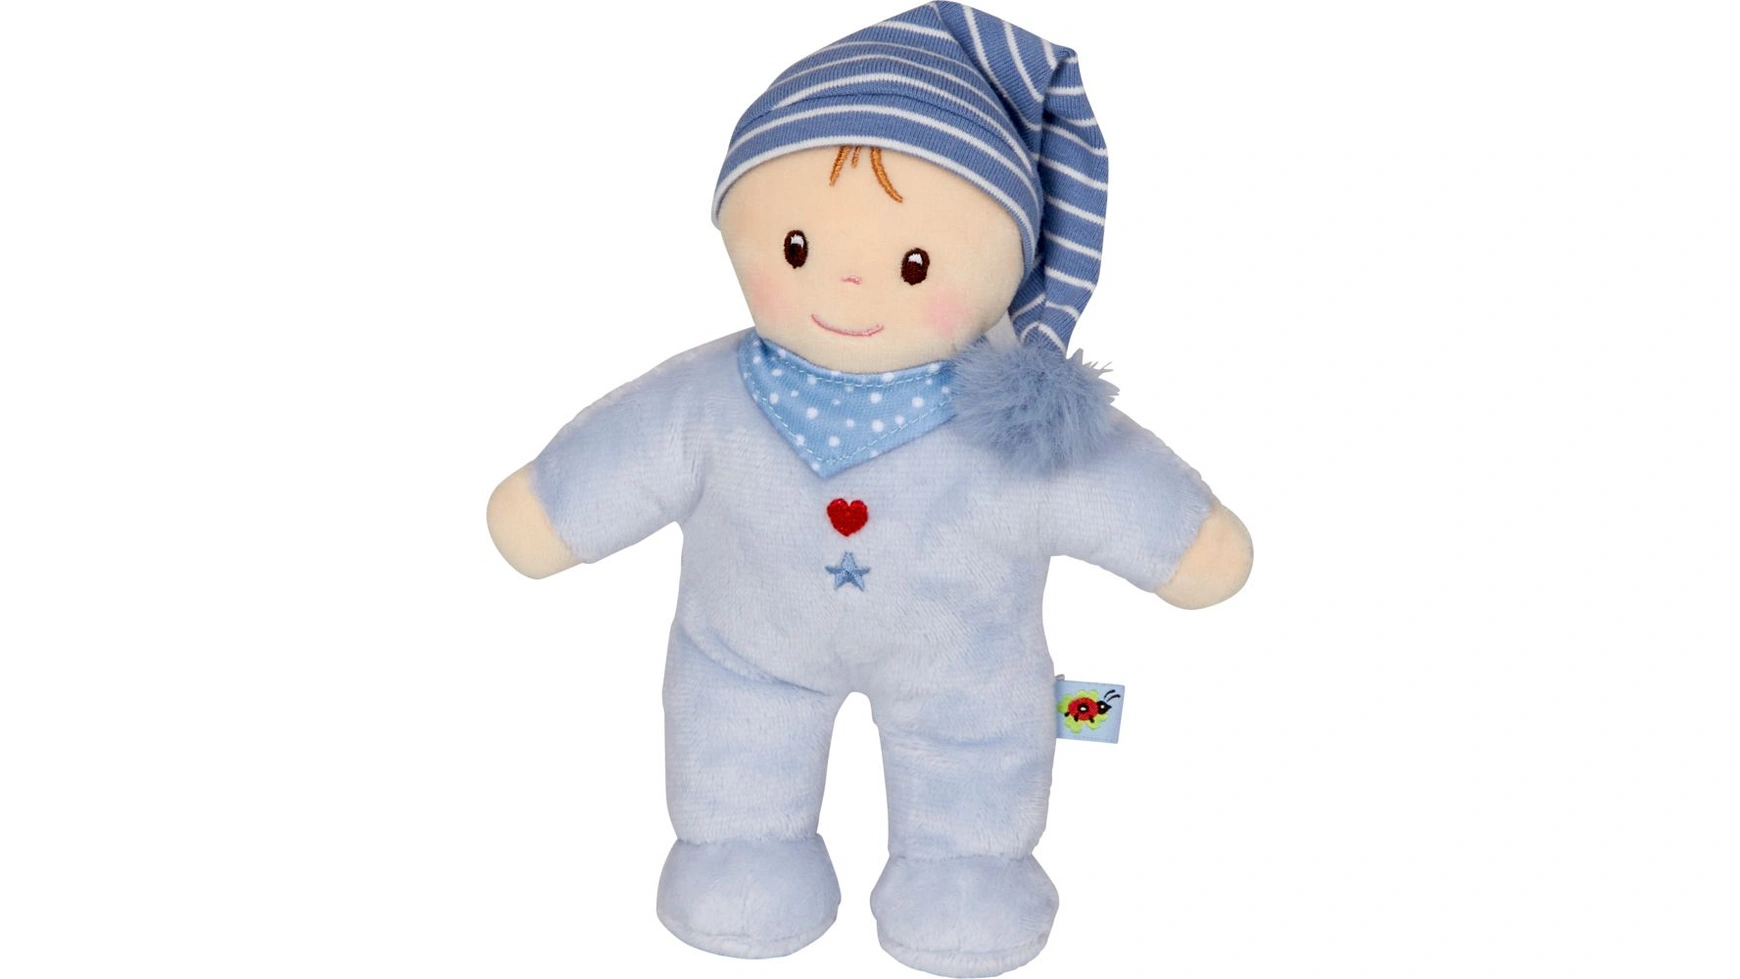 The Spiegelburg Маленькая Мягкая кукла, светло-голубой BabyGlück